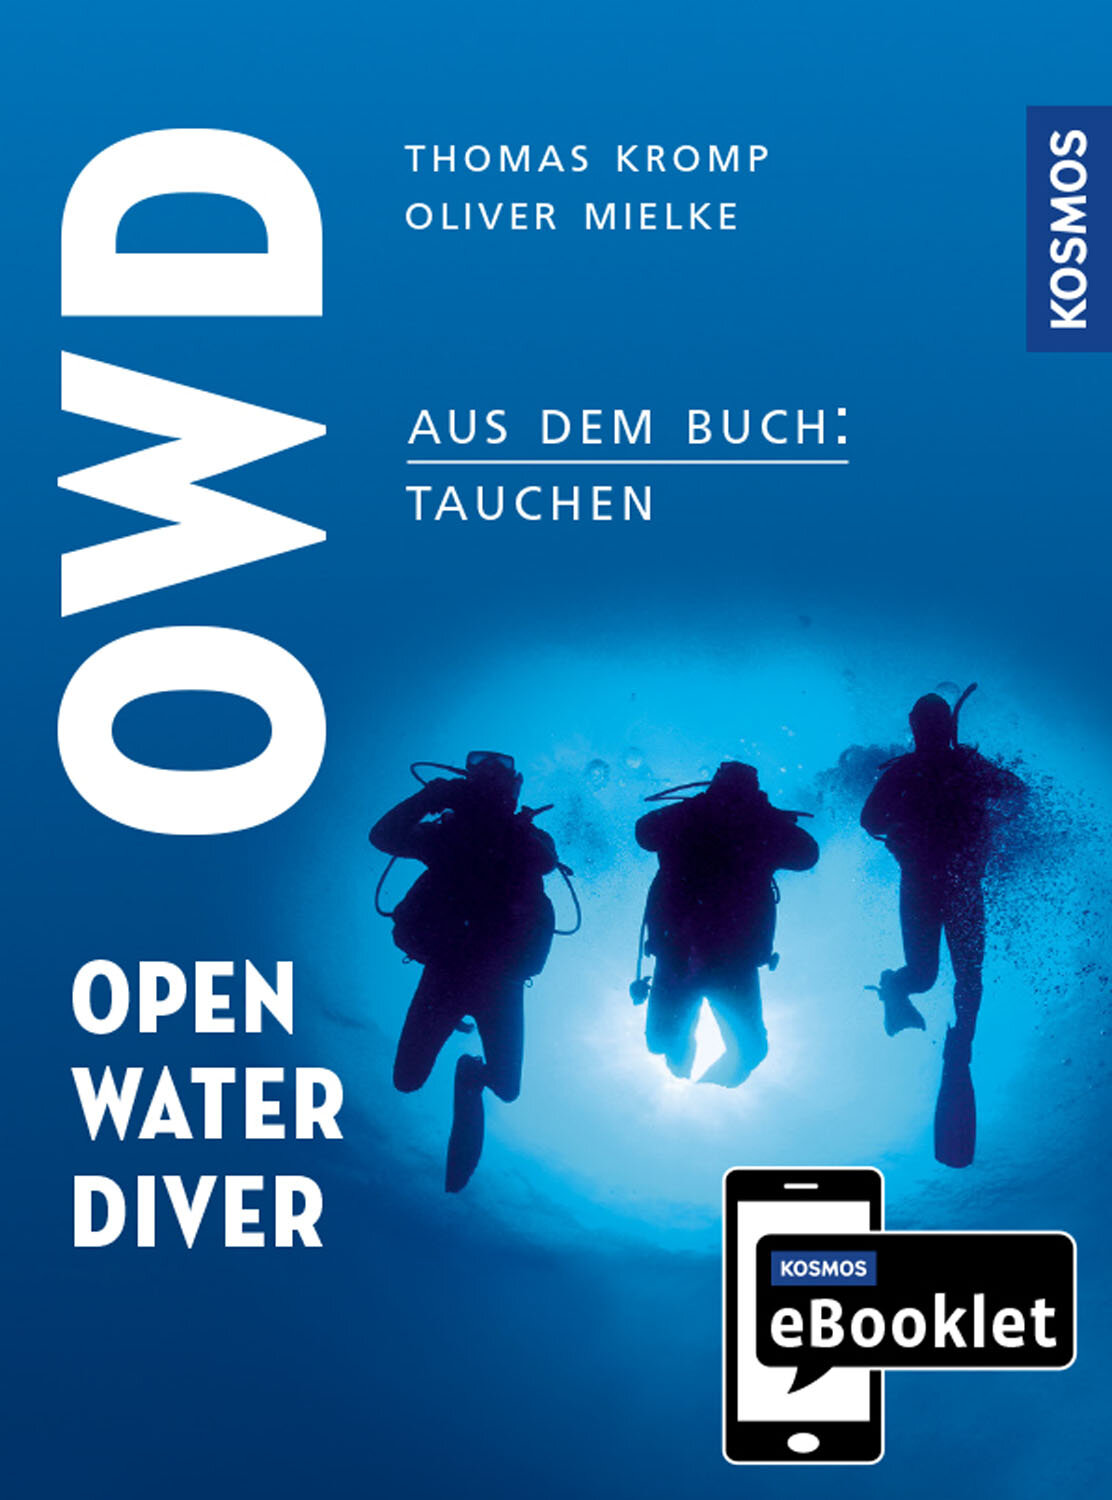 KOSMOS eBooklet: Open Water Diver (OWD)